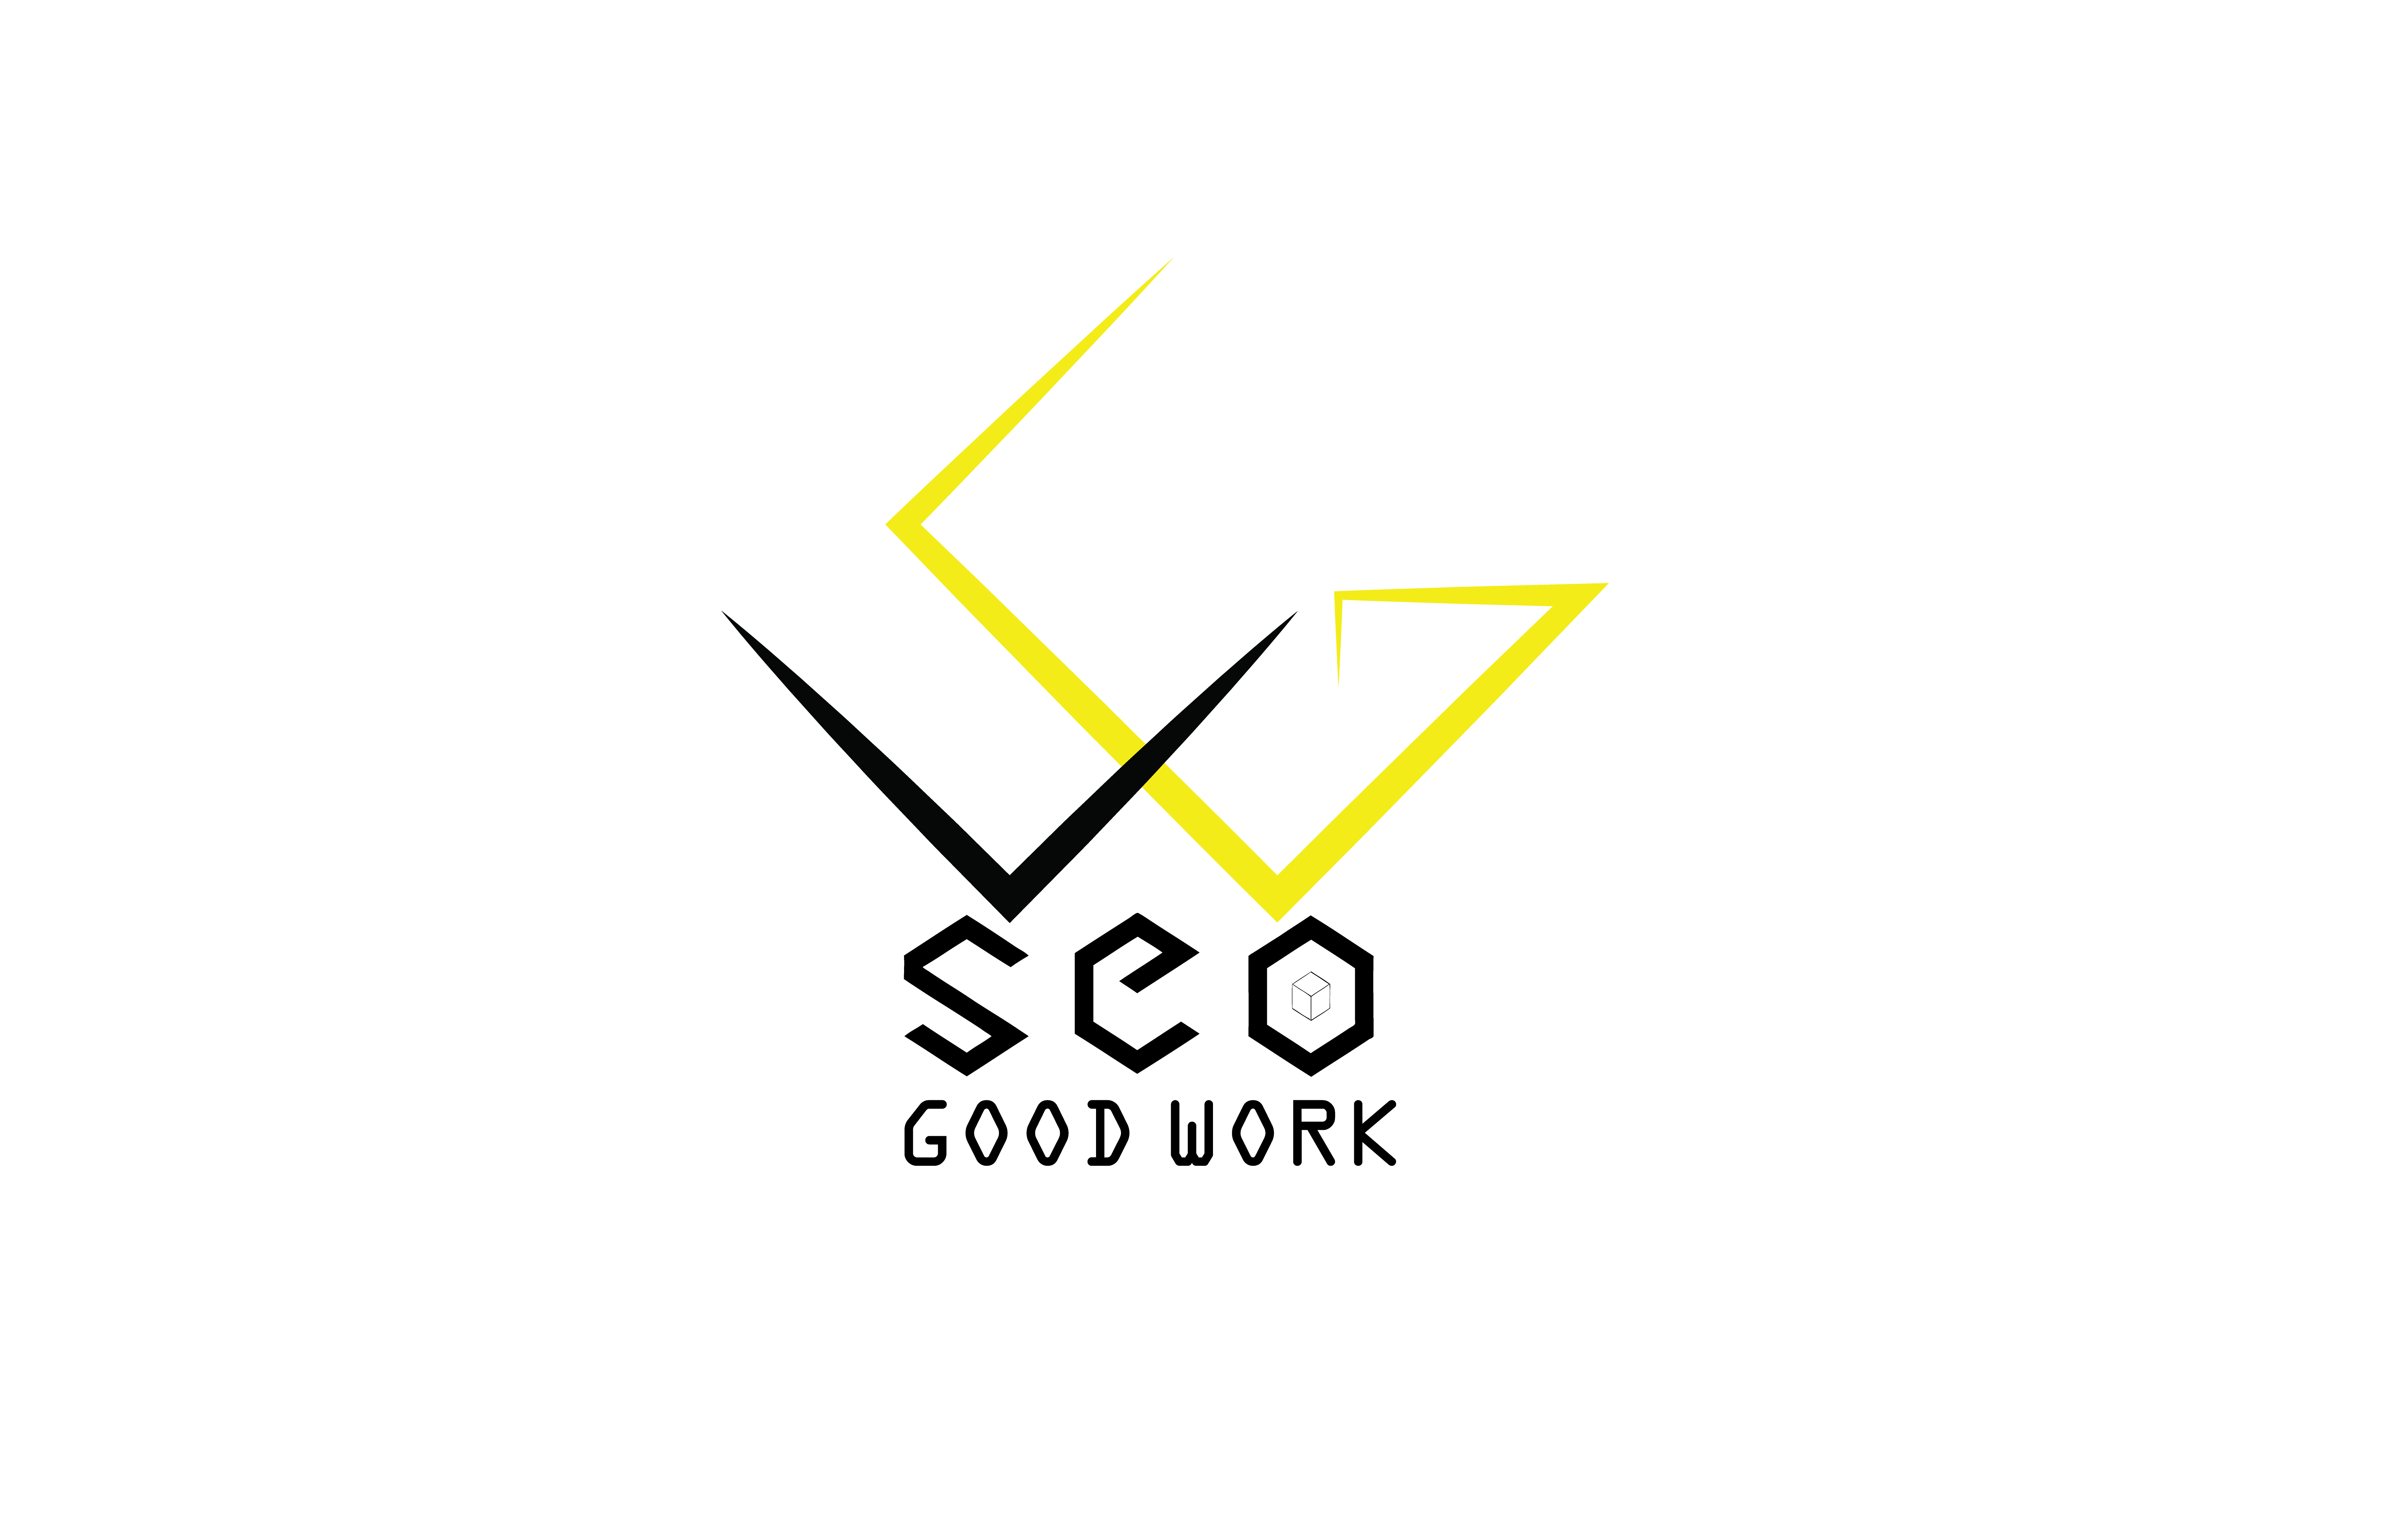 HH company seo good work